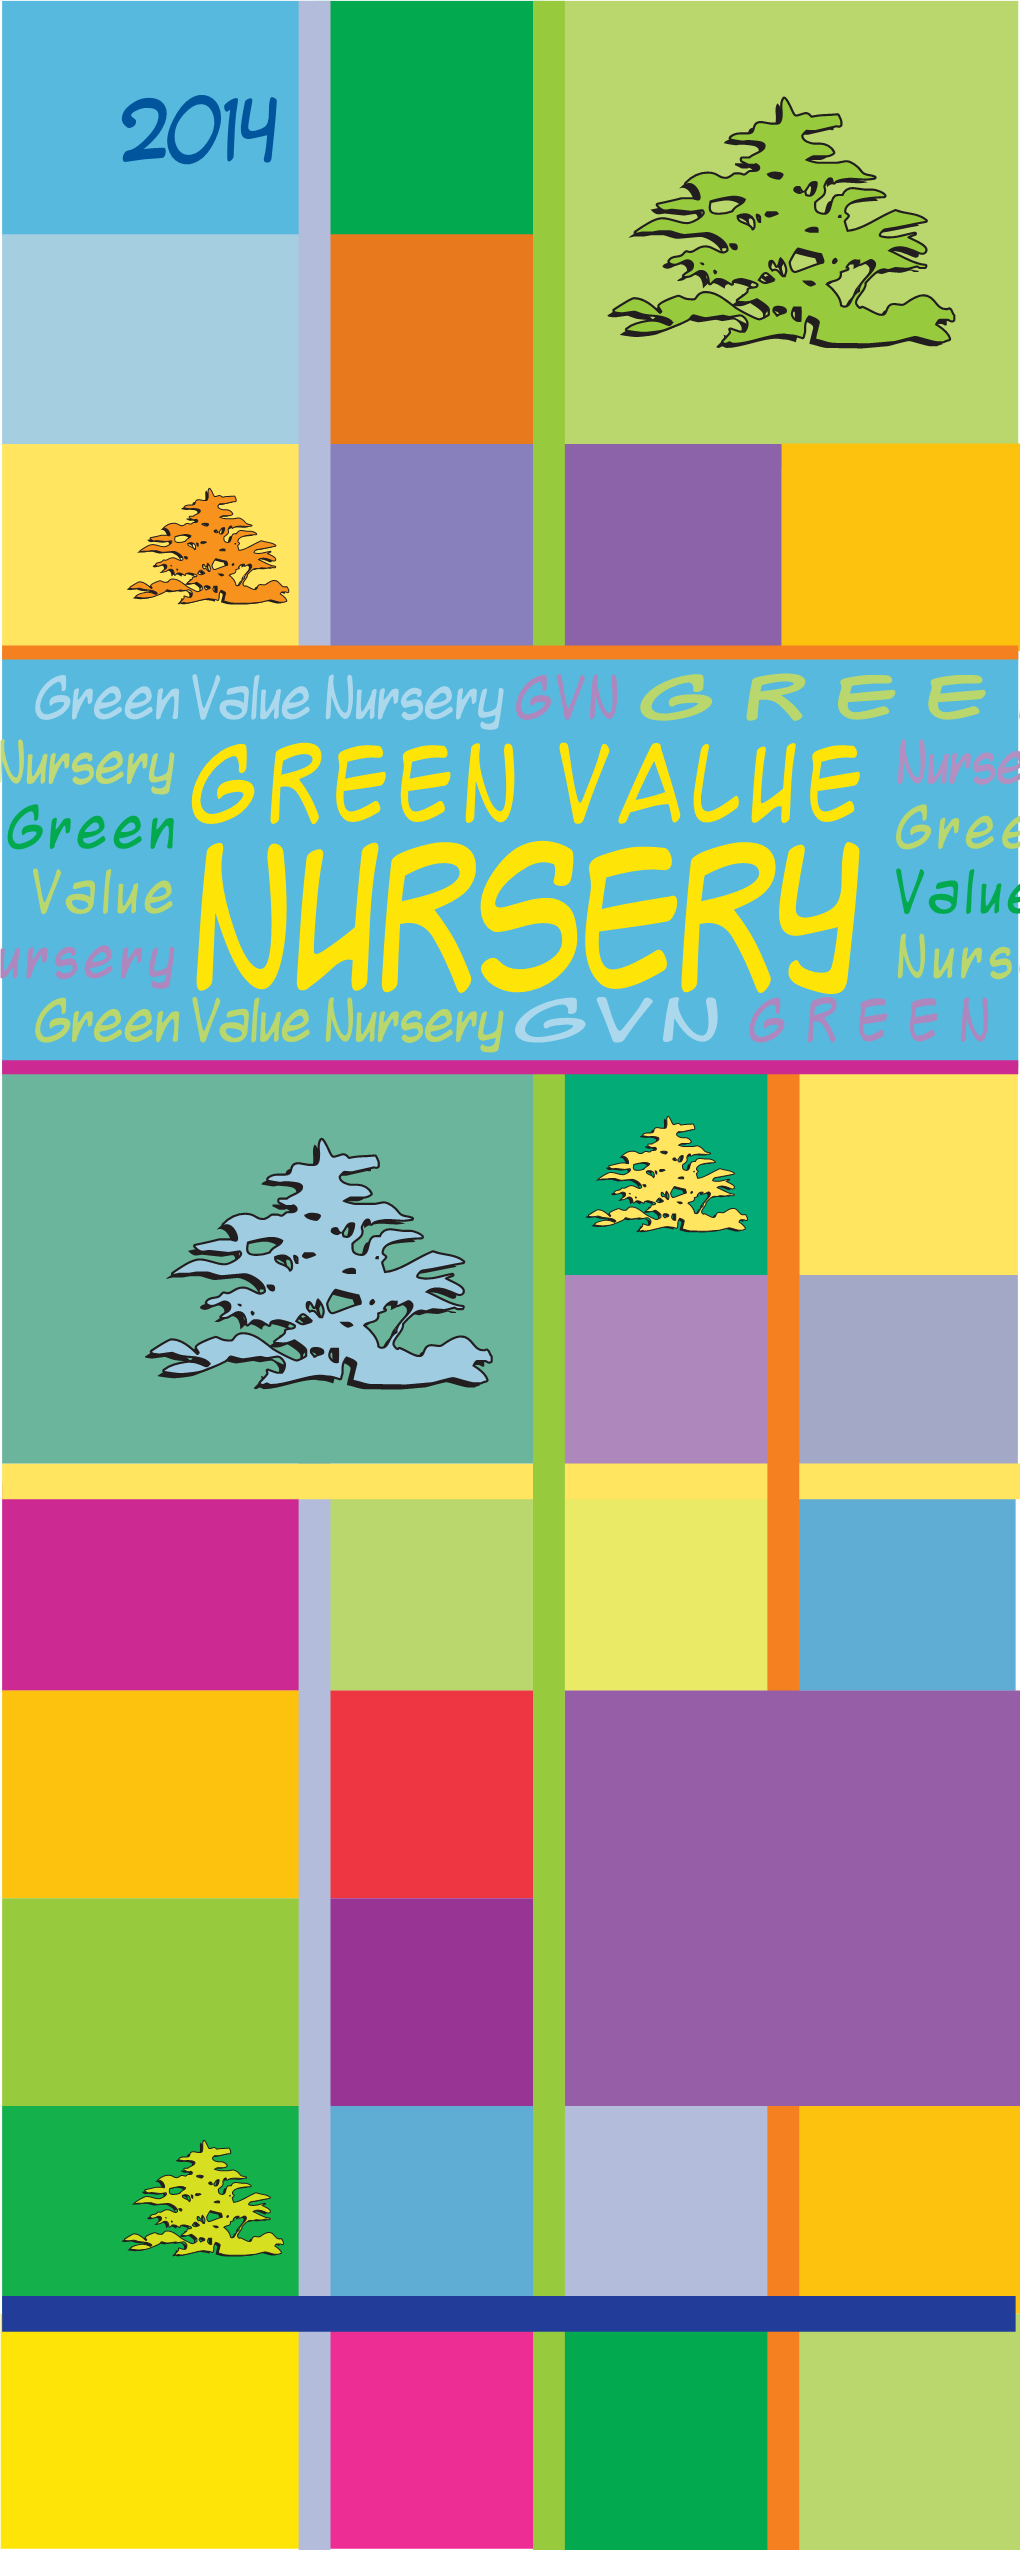 Green Value Nursery